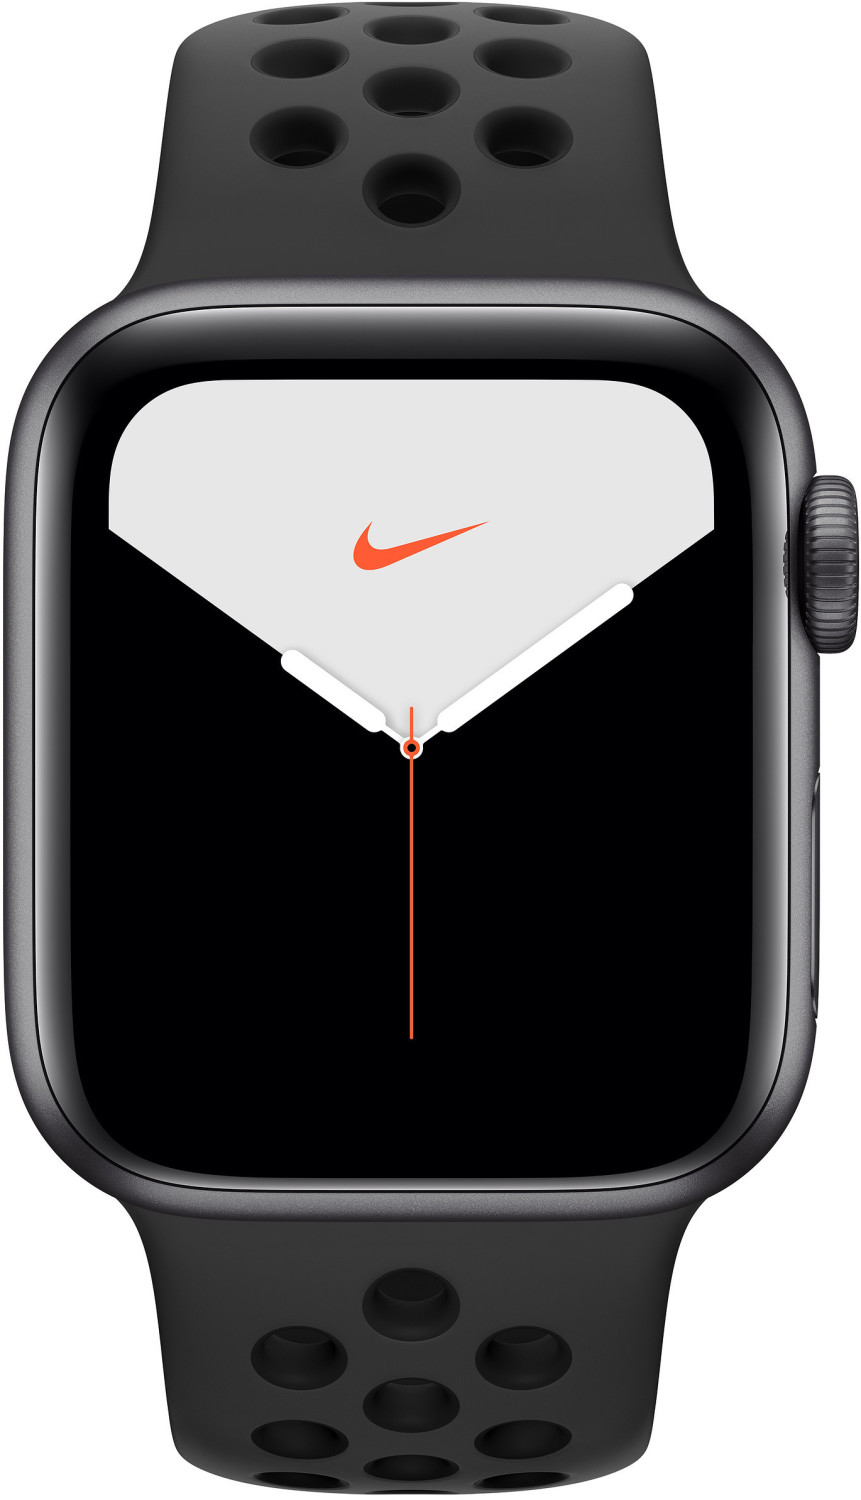 Apple Watch Series 5 Nike+ GPS + LTE 40mm Space Grau Anthrazit/Schwarz